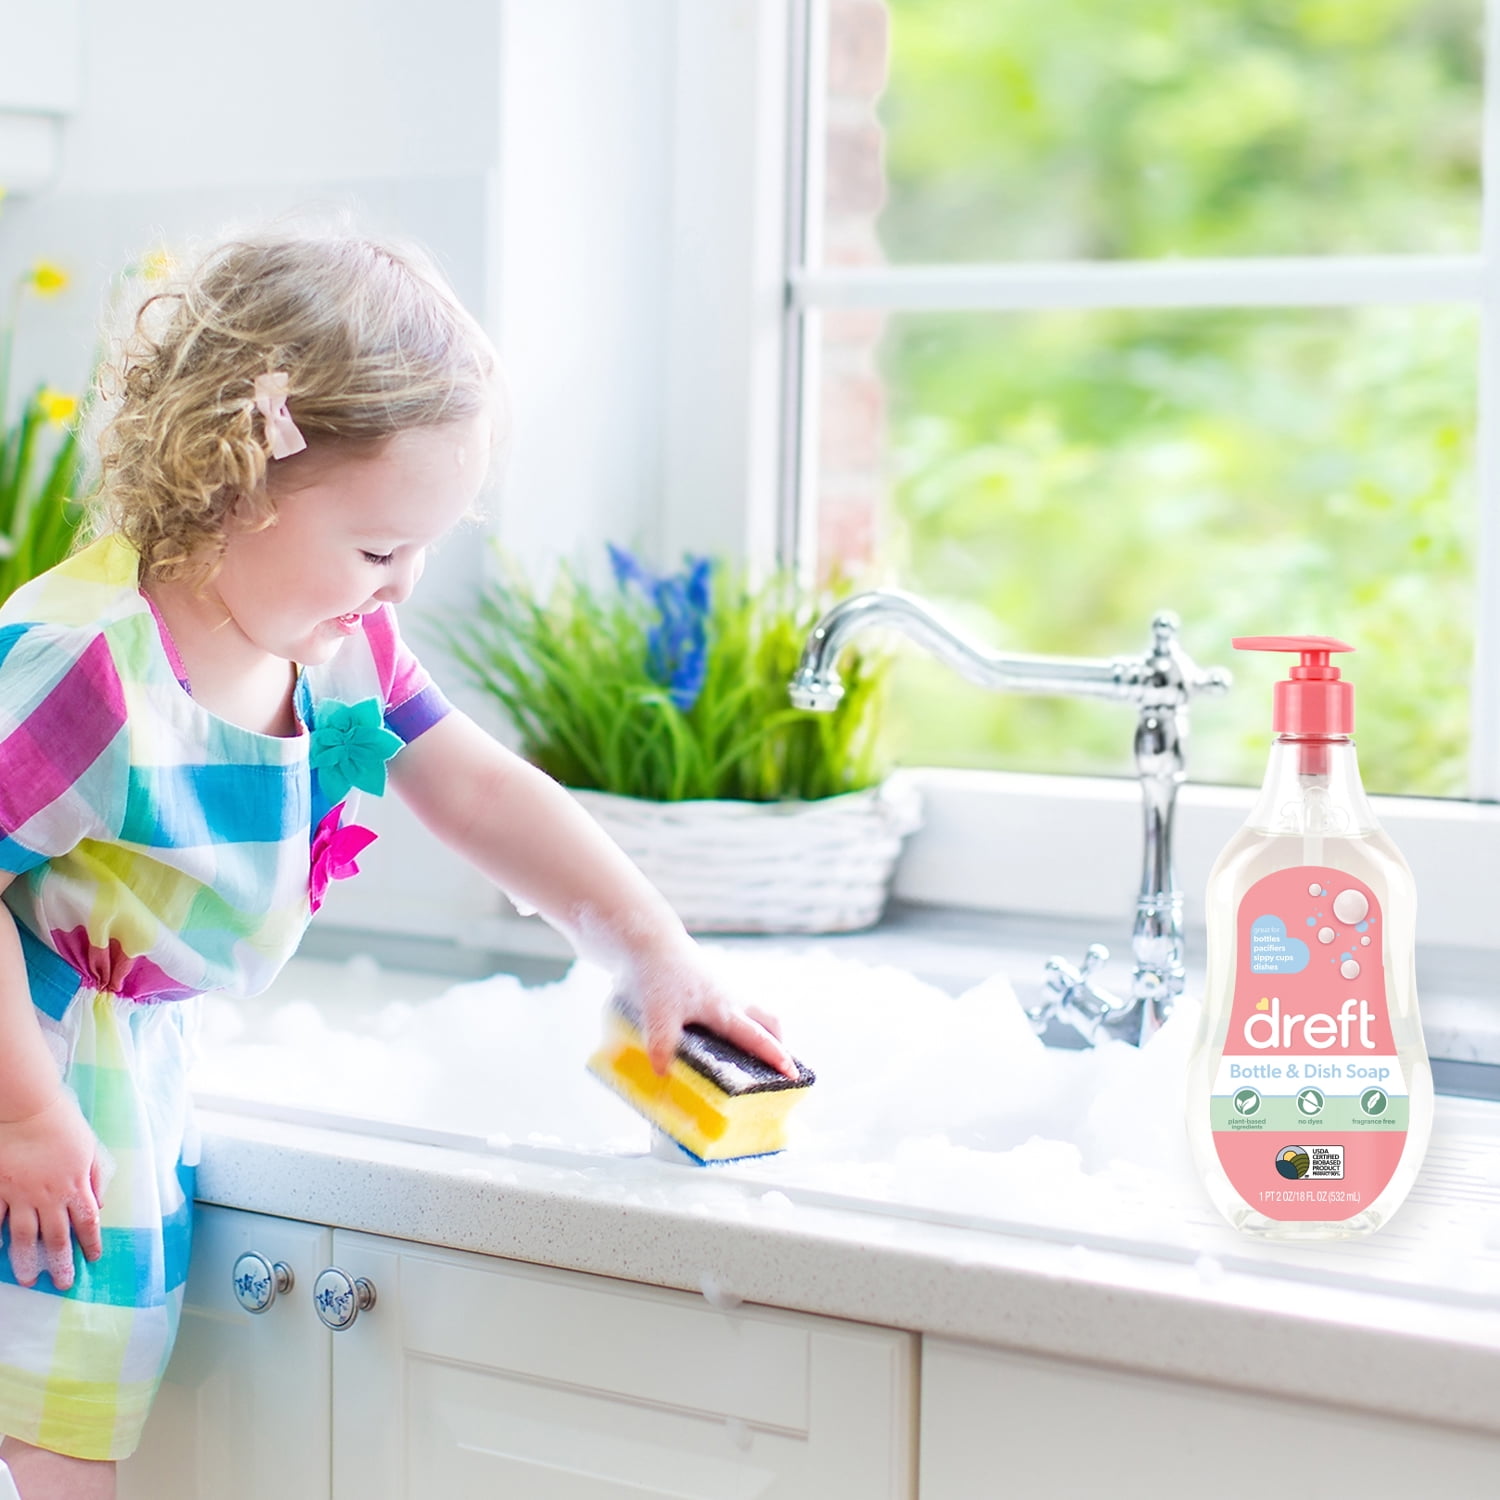 Dreft Baby, Bottle and Dish Soap, Removes Milk Film & Odor, Plant